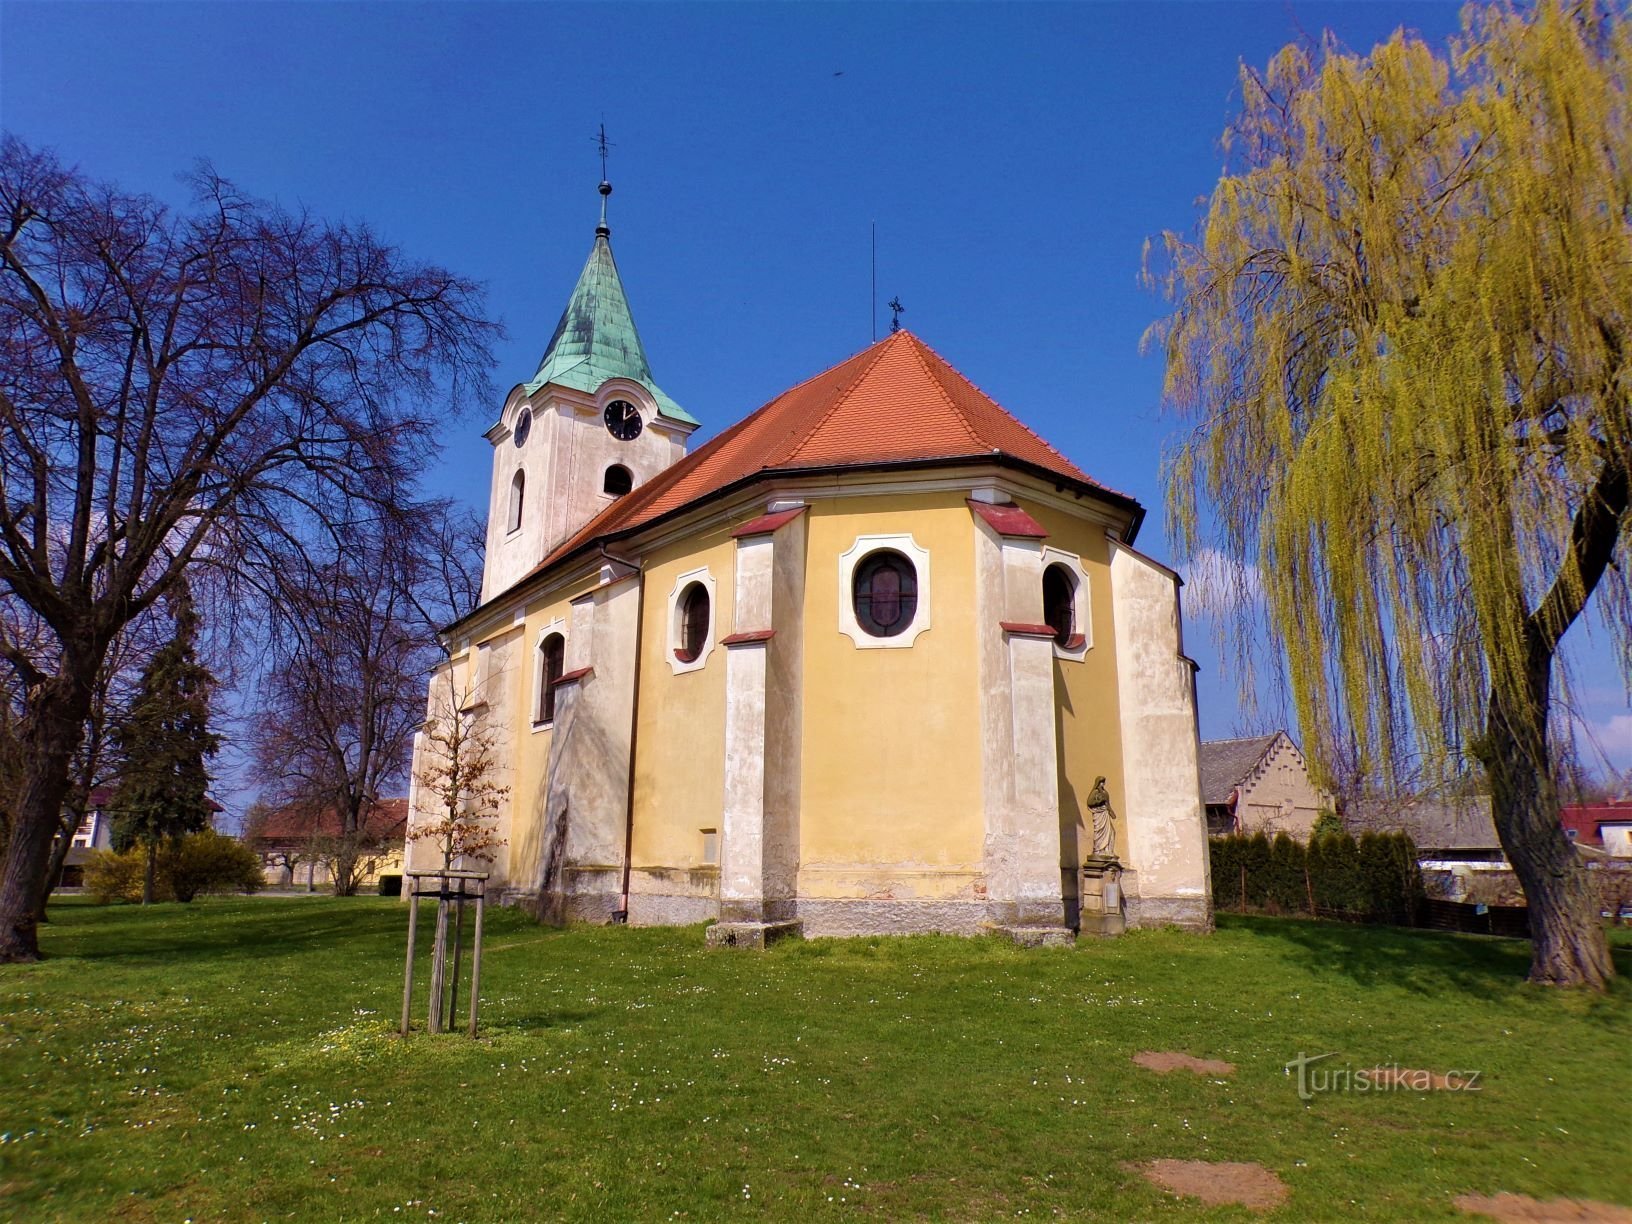 Igreja de St. Jakub Vetšího (Kratonohy, 21.4.2021/XNUMX/XNUMX) See More